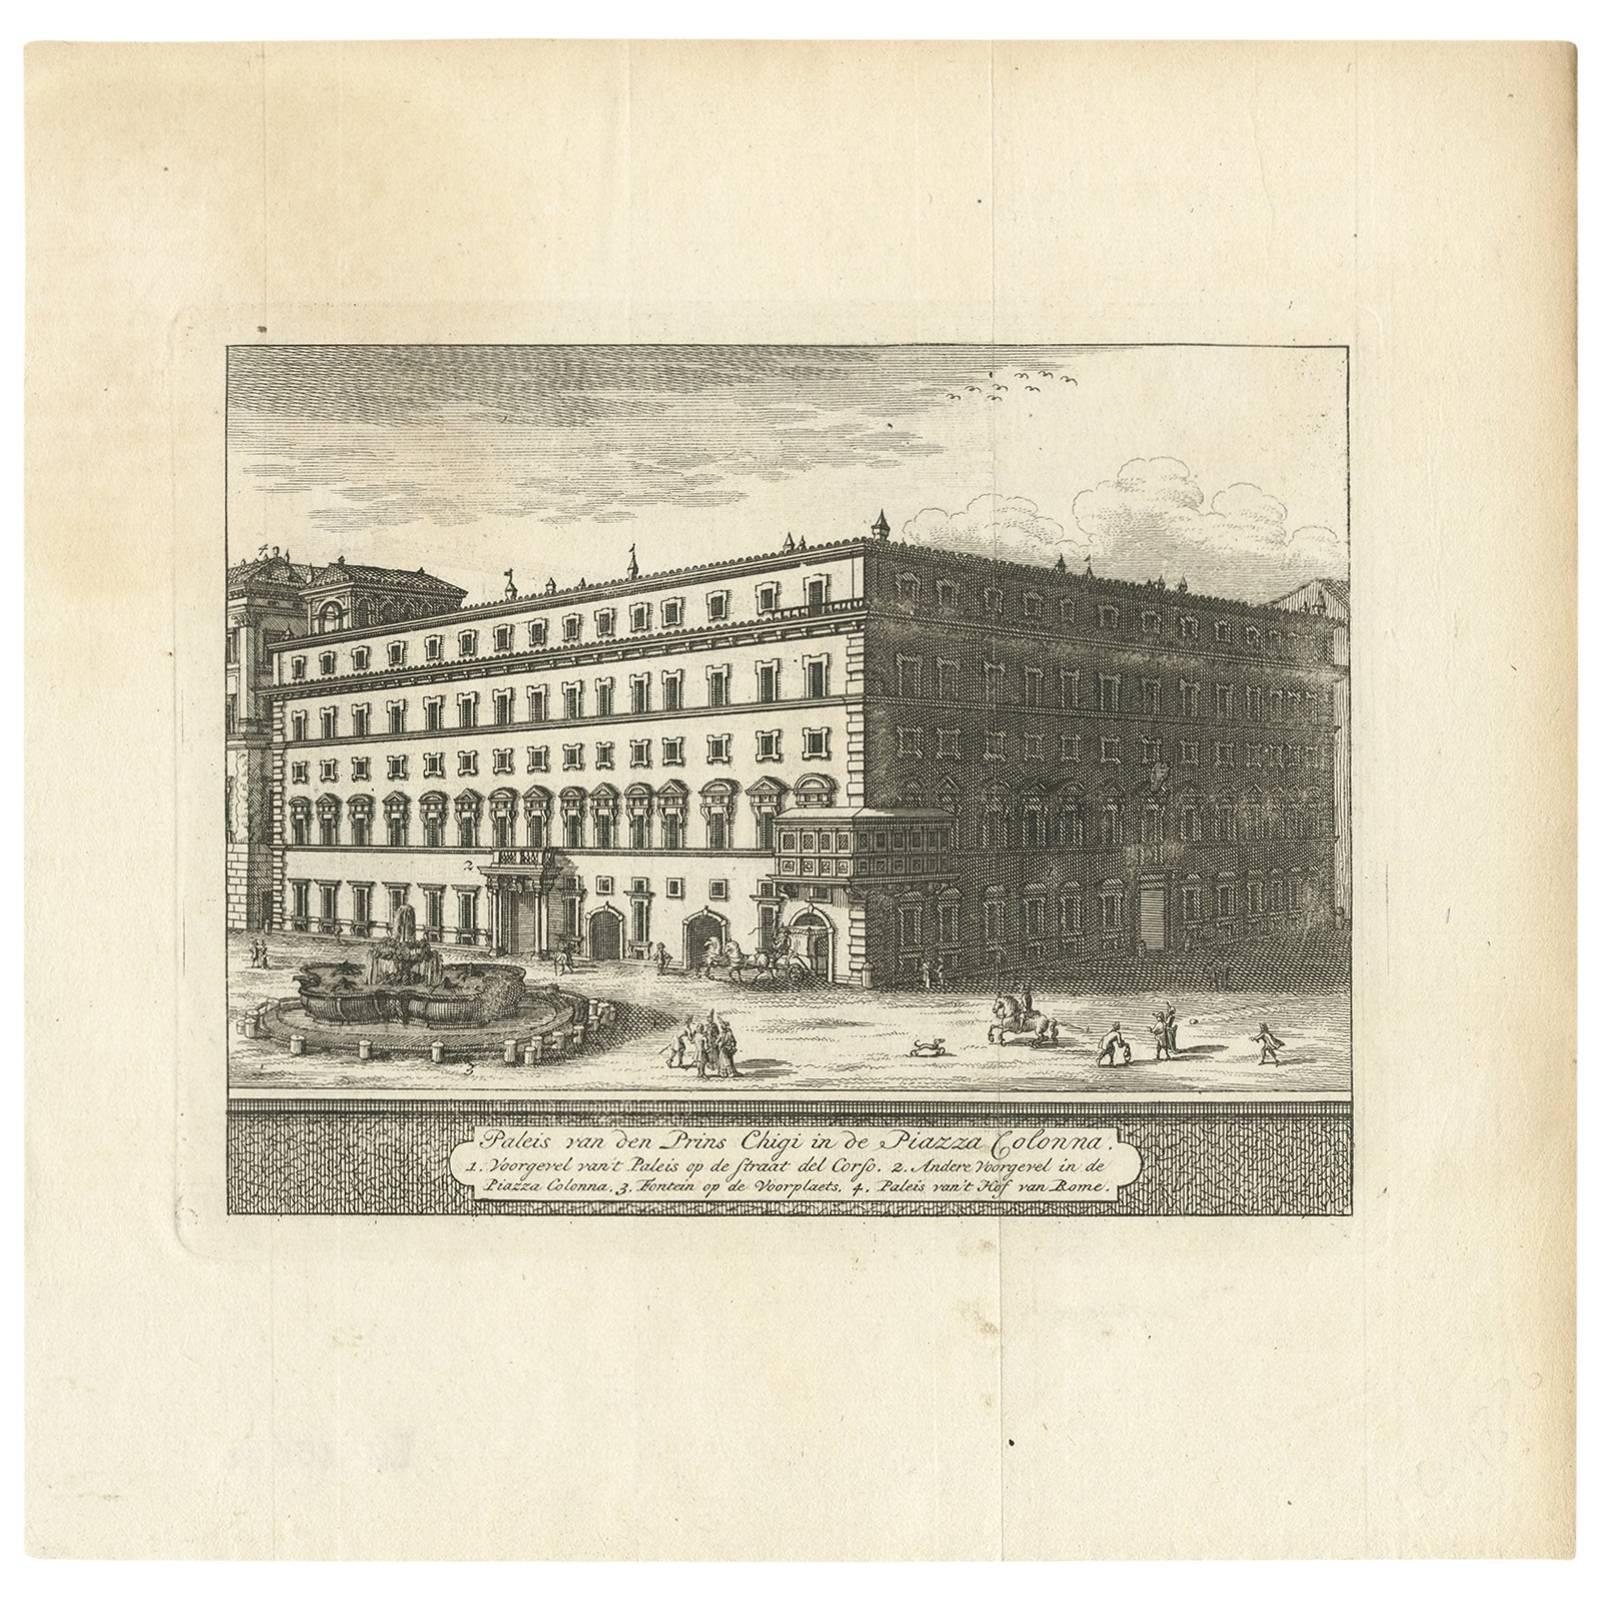 Antique Print of Palazzo Chigi Rome by M. de Bruyn, 1779